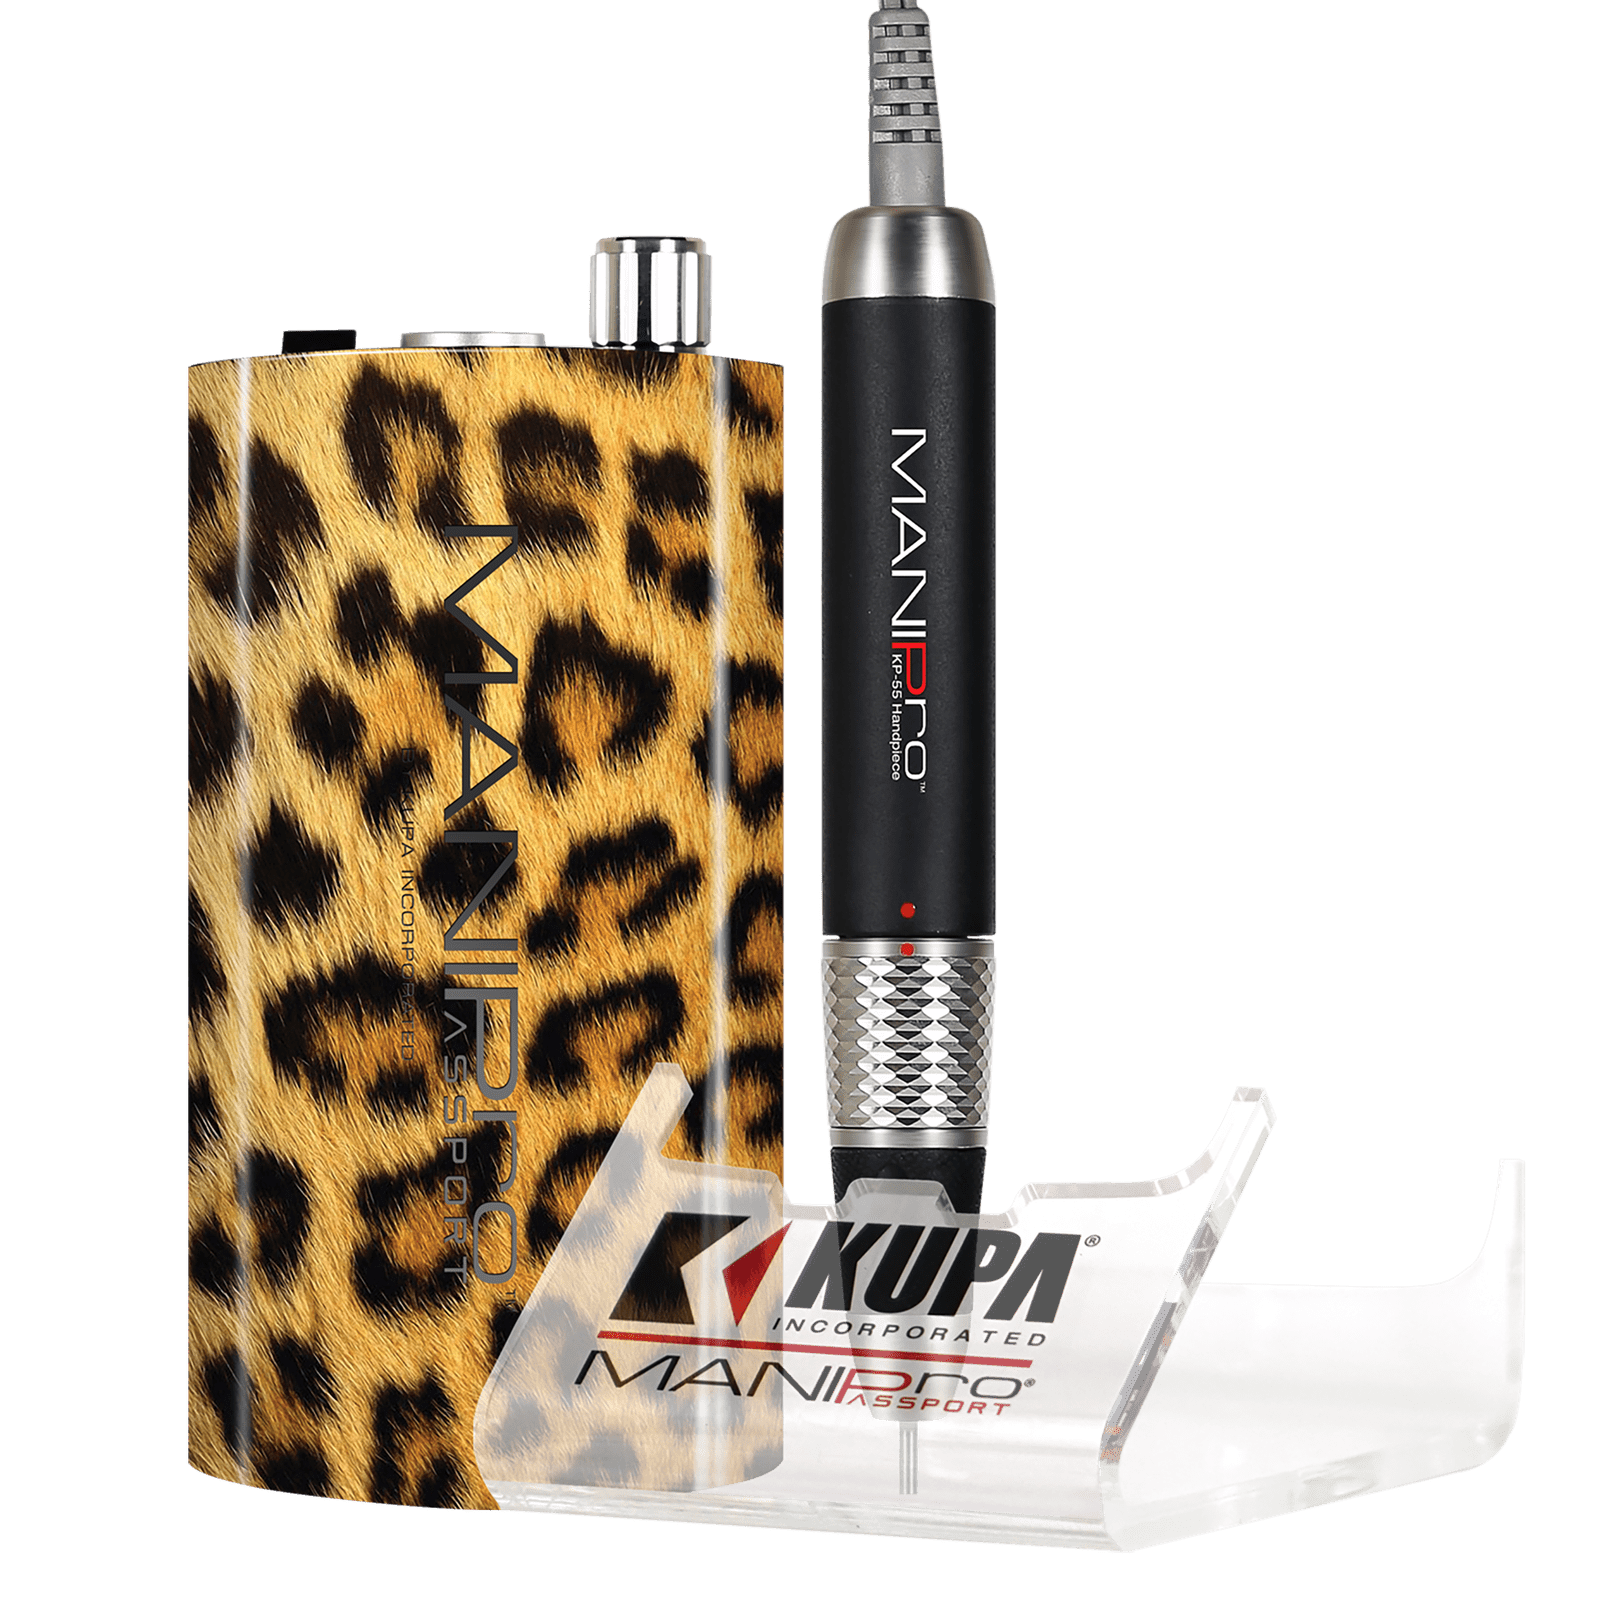 Kupa ManiPro Passport Nail Drill - Professional Electric Nail File | KP-55 - Cheetah